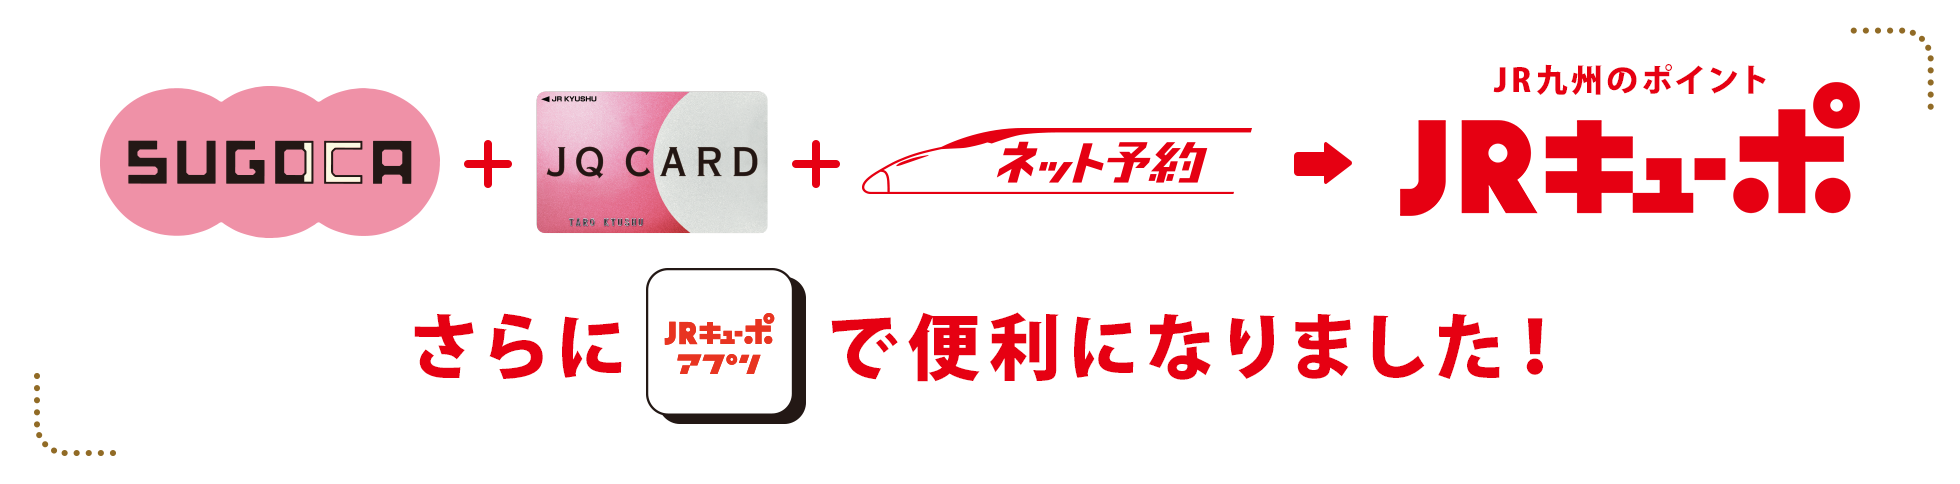 SUGOCA＋JQ CARDで便利なJRキューポの解説図